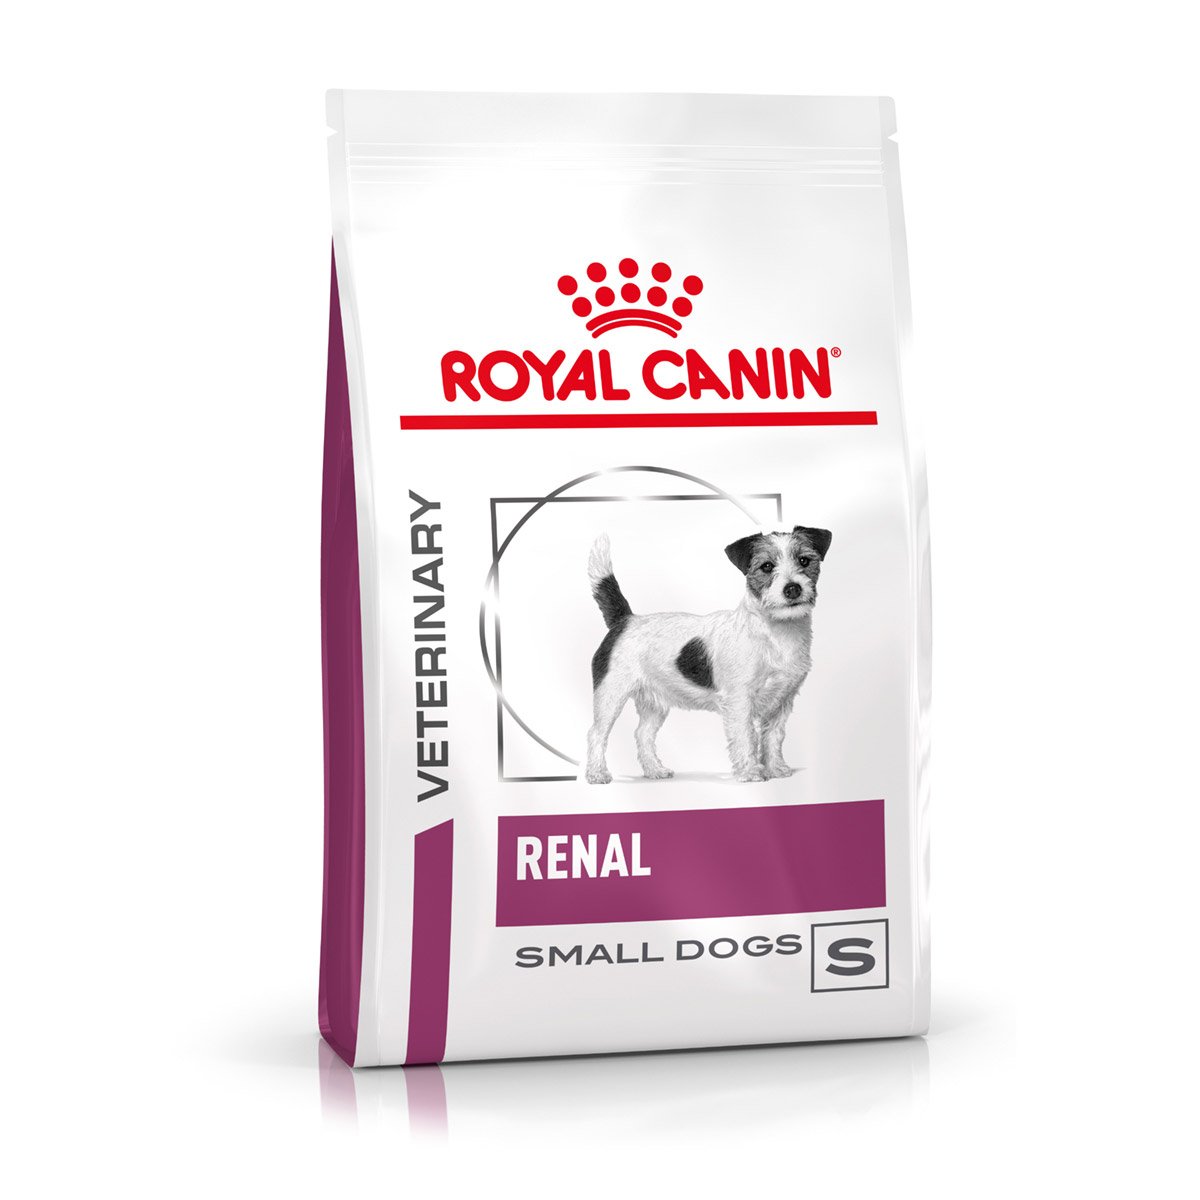 ROYAL CANIN® Veterinary RENAL SMALL DOGS Trockenfutter für Hunde 1,5kg von Royal Canin